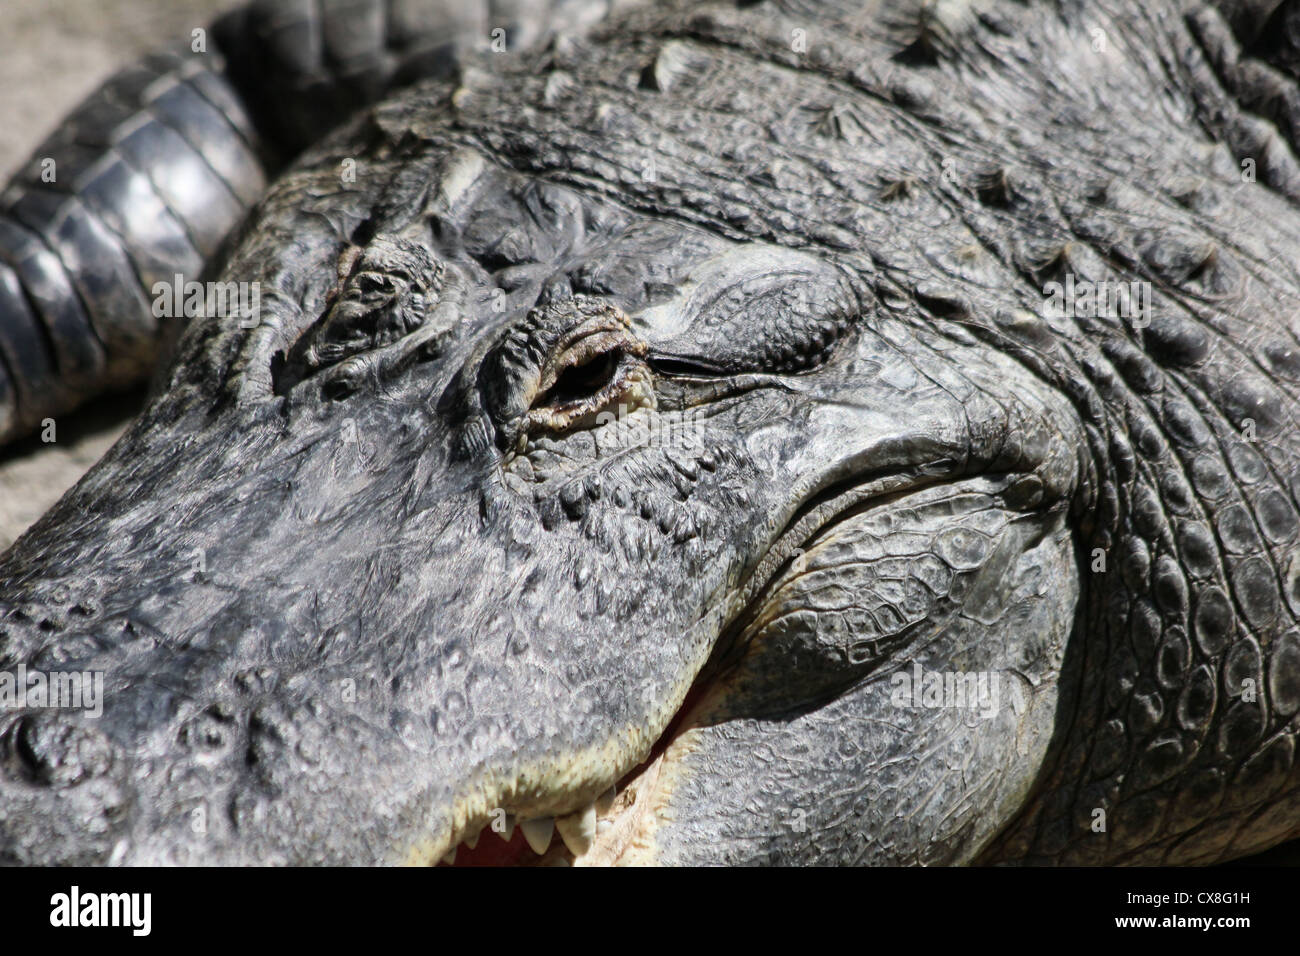 Crocodile or alligator in the sun. Stock Photo